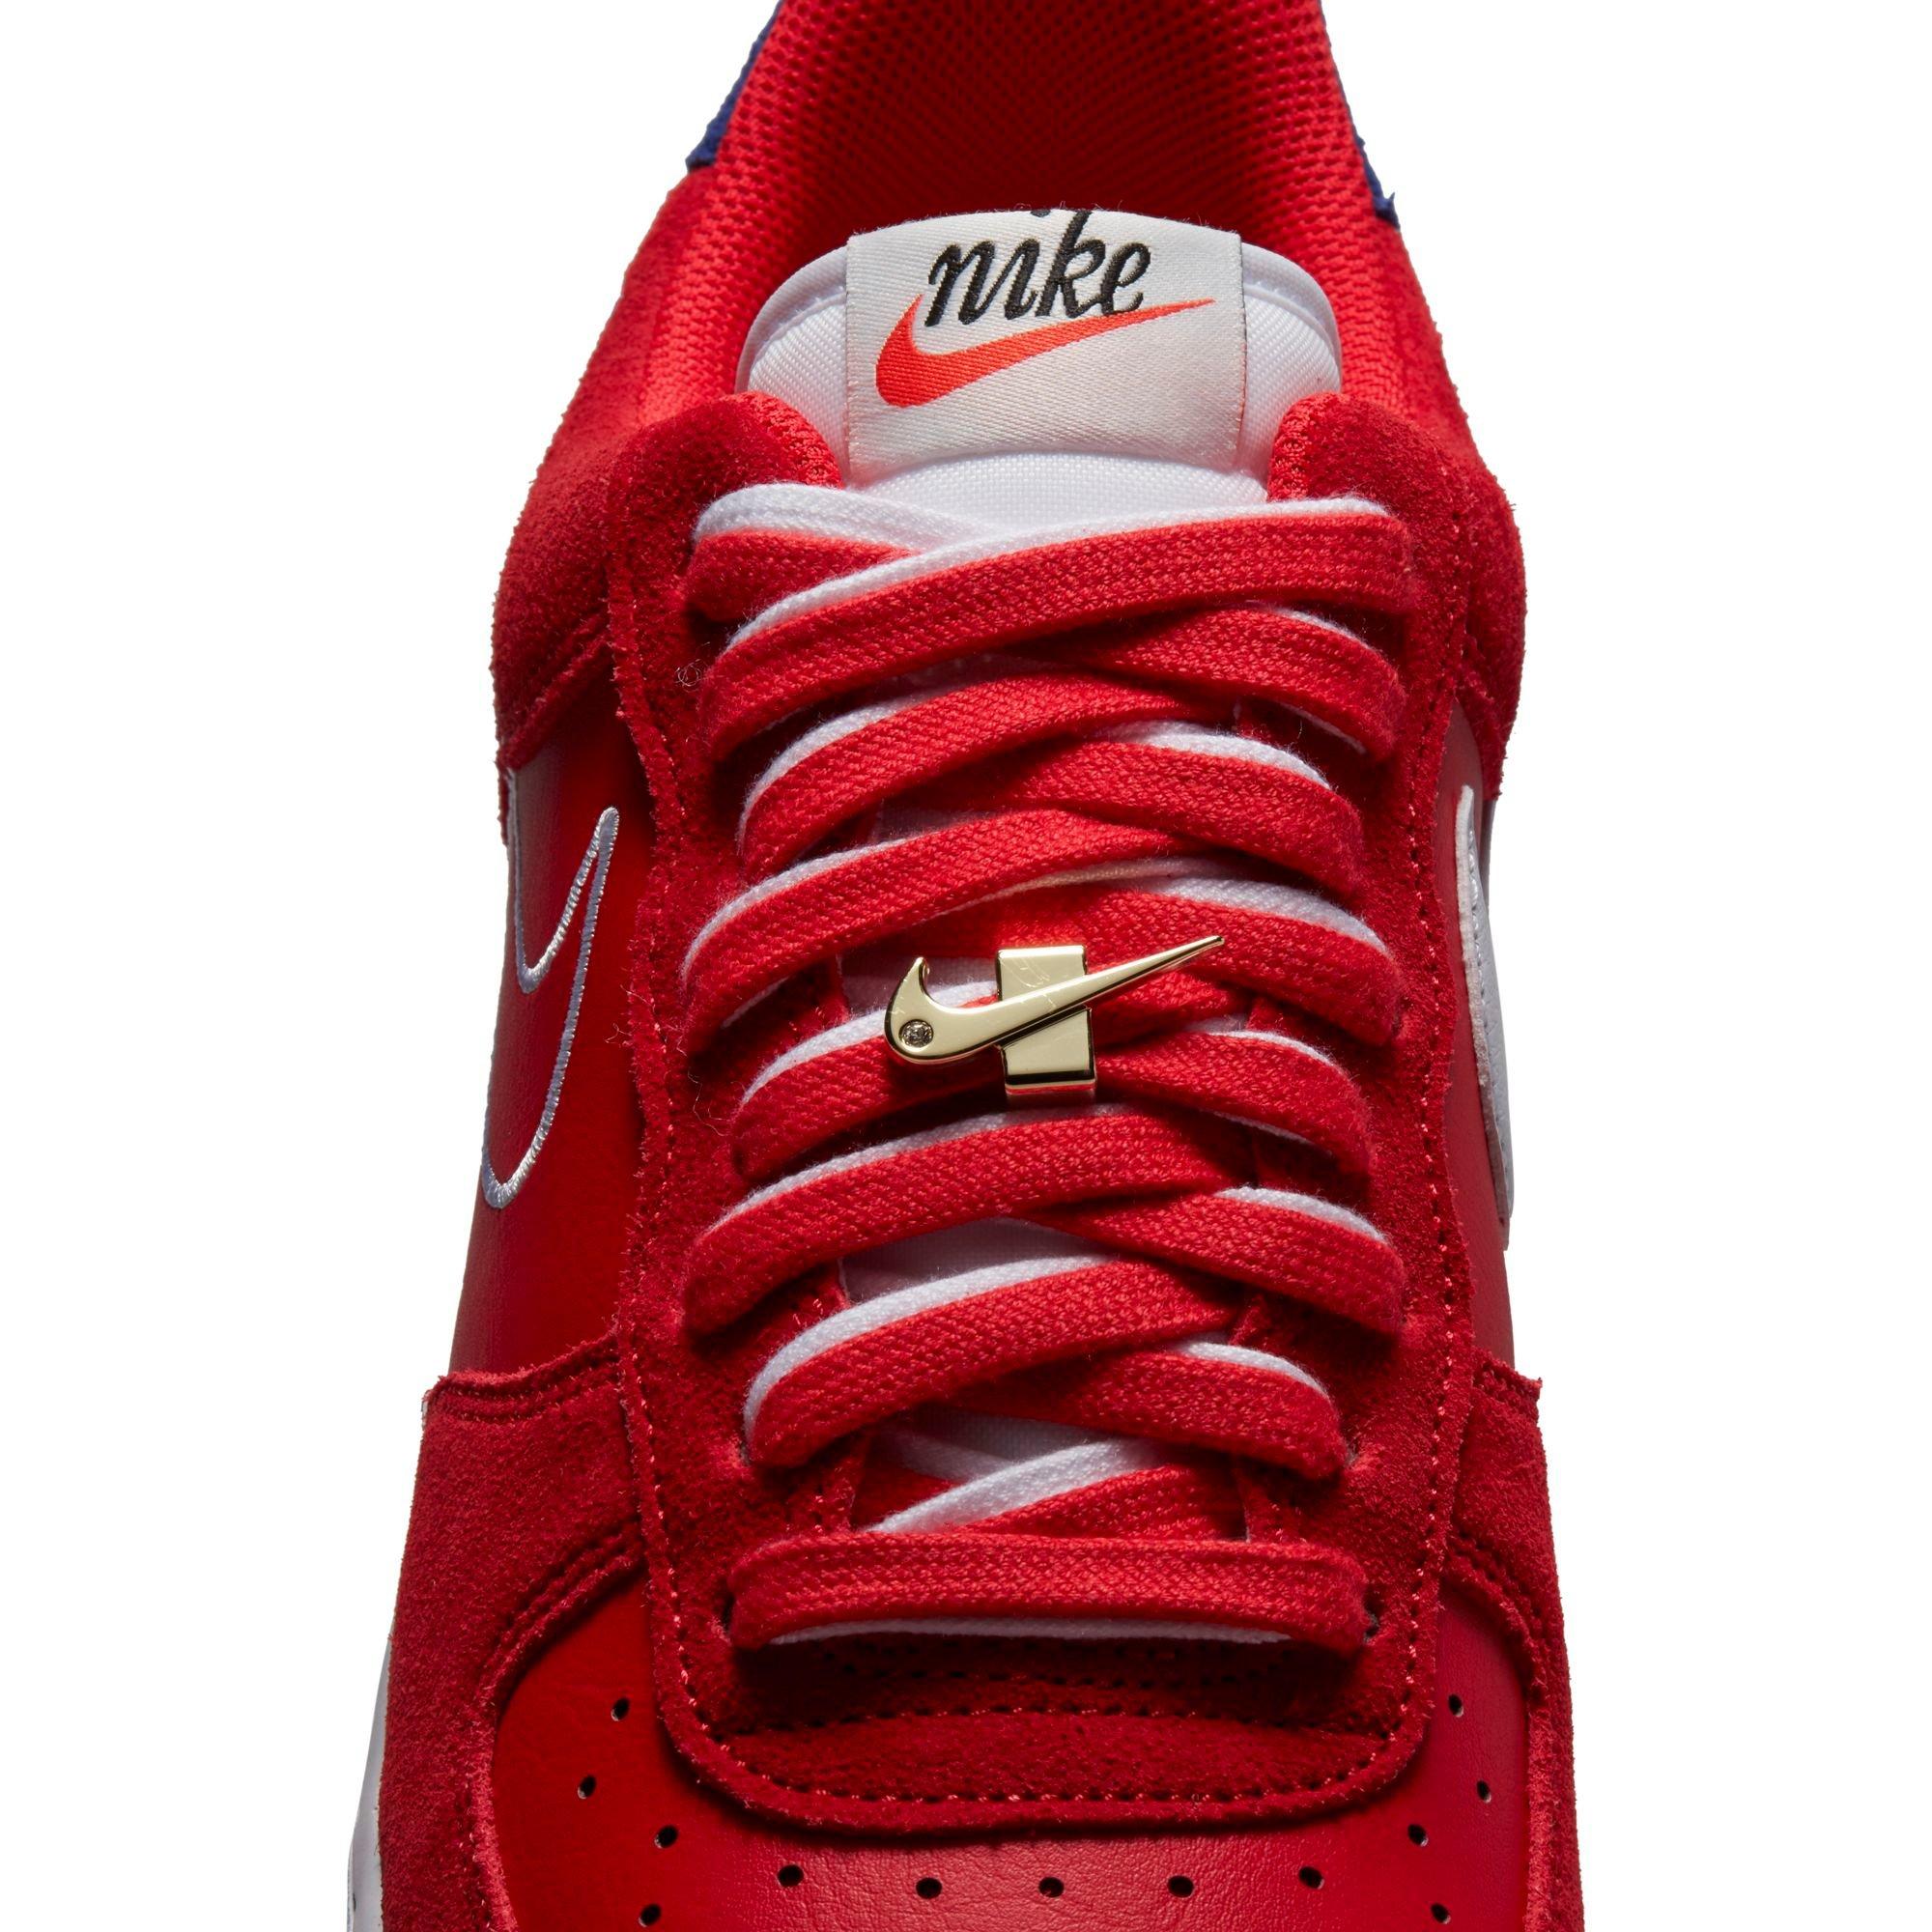 Nike Air Force 1 '07 Low LV8 Americana White/University Red/Deep Royal  Men's Shoe